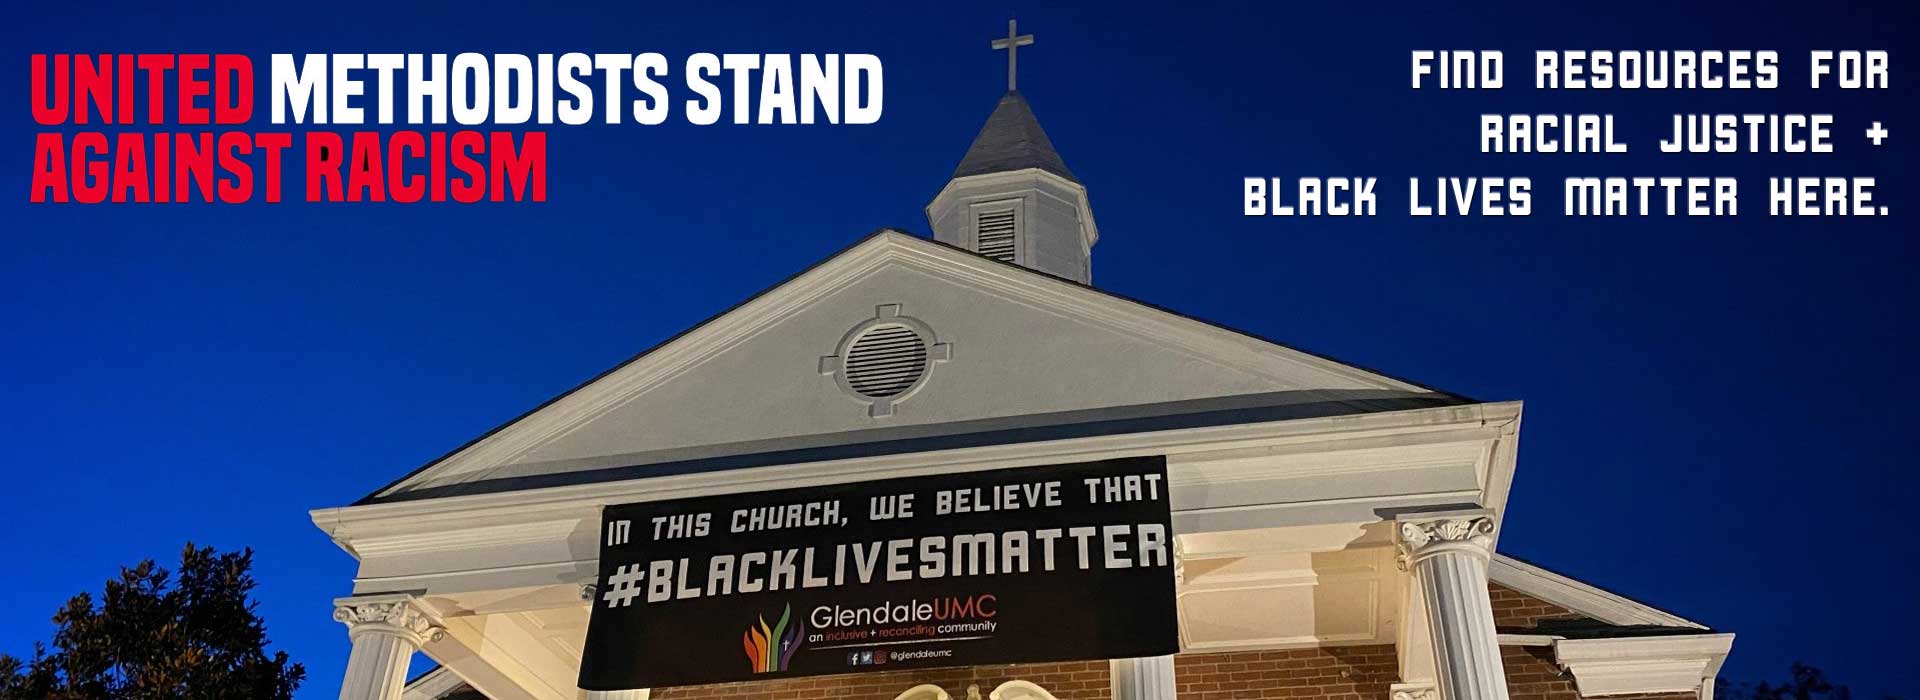 United-Methodists-Stand-Against-Racism-Glendale-United-Methodist-Church-Nashville-cover-2.jpg